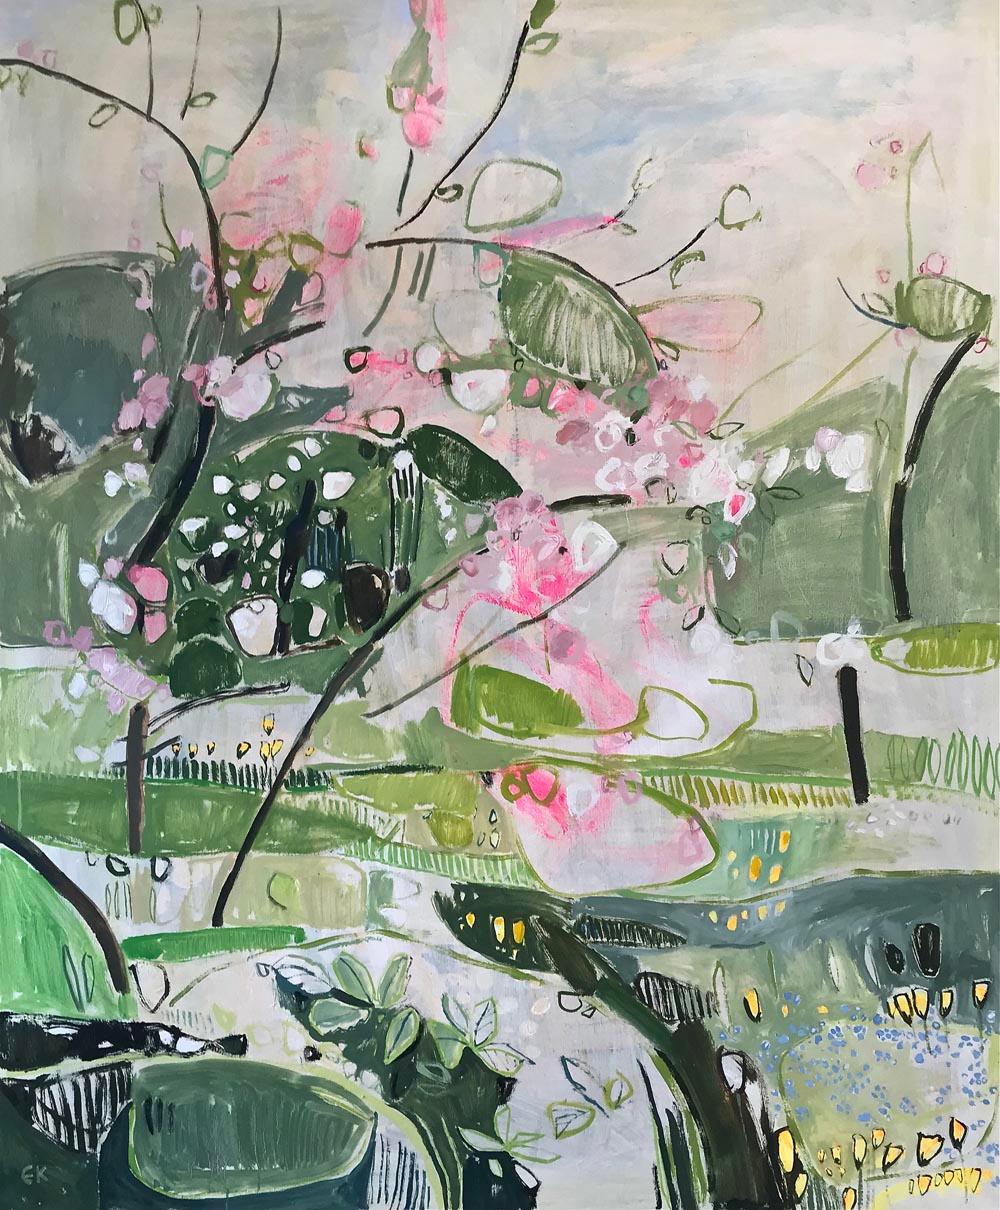 Elaine Kazimierczuk Abstract Painting - Apple Blossom at Botley Lane Allotments, Oxford